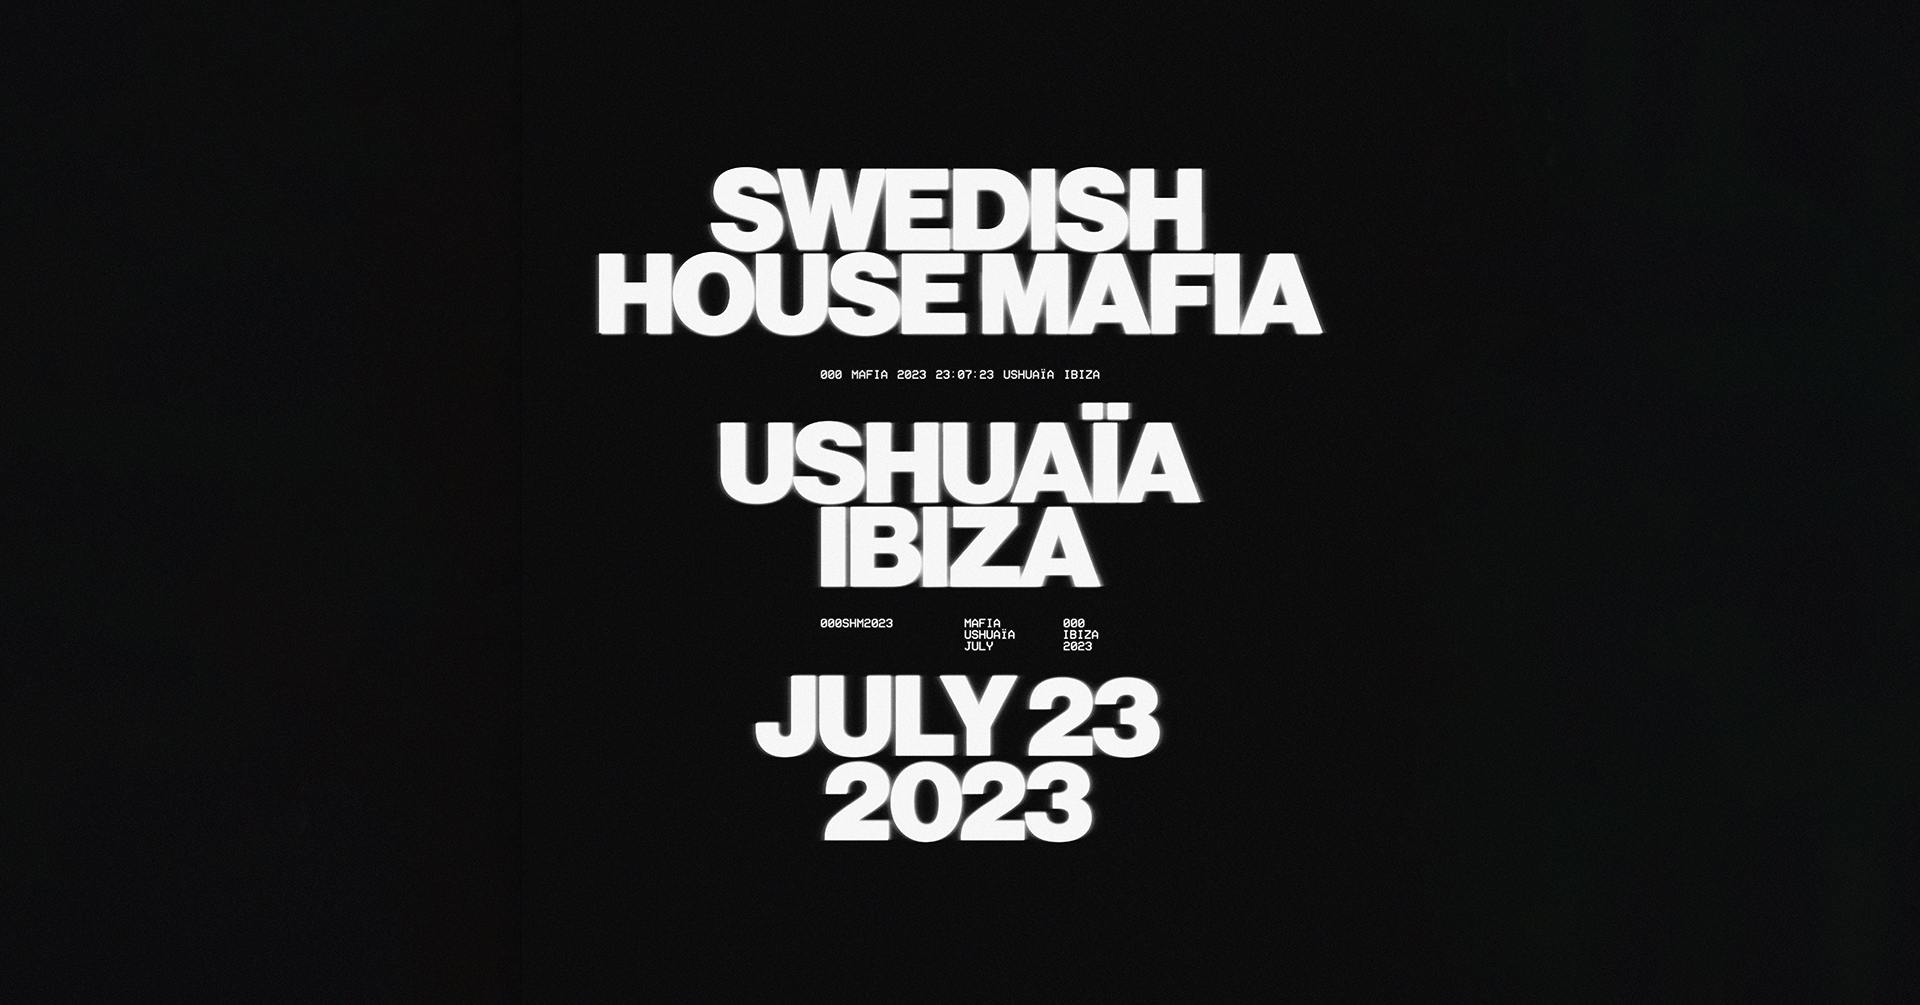 SWEDISH HOUSE MAFIA EVENT